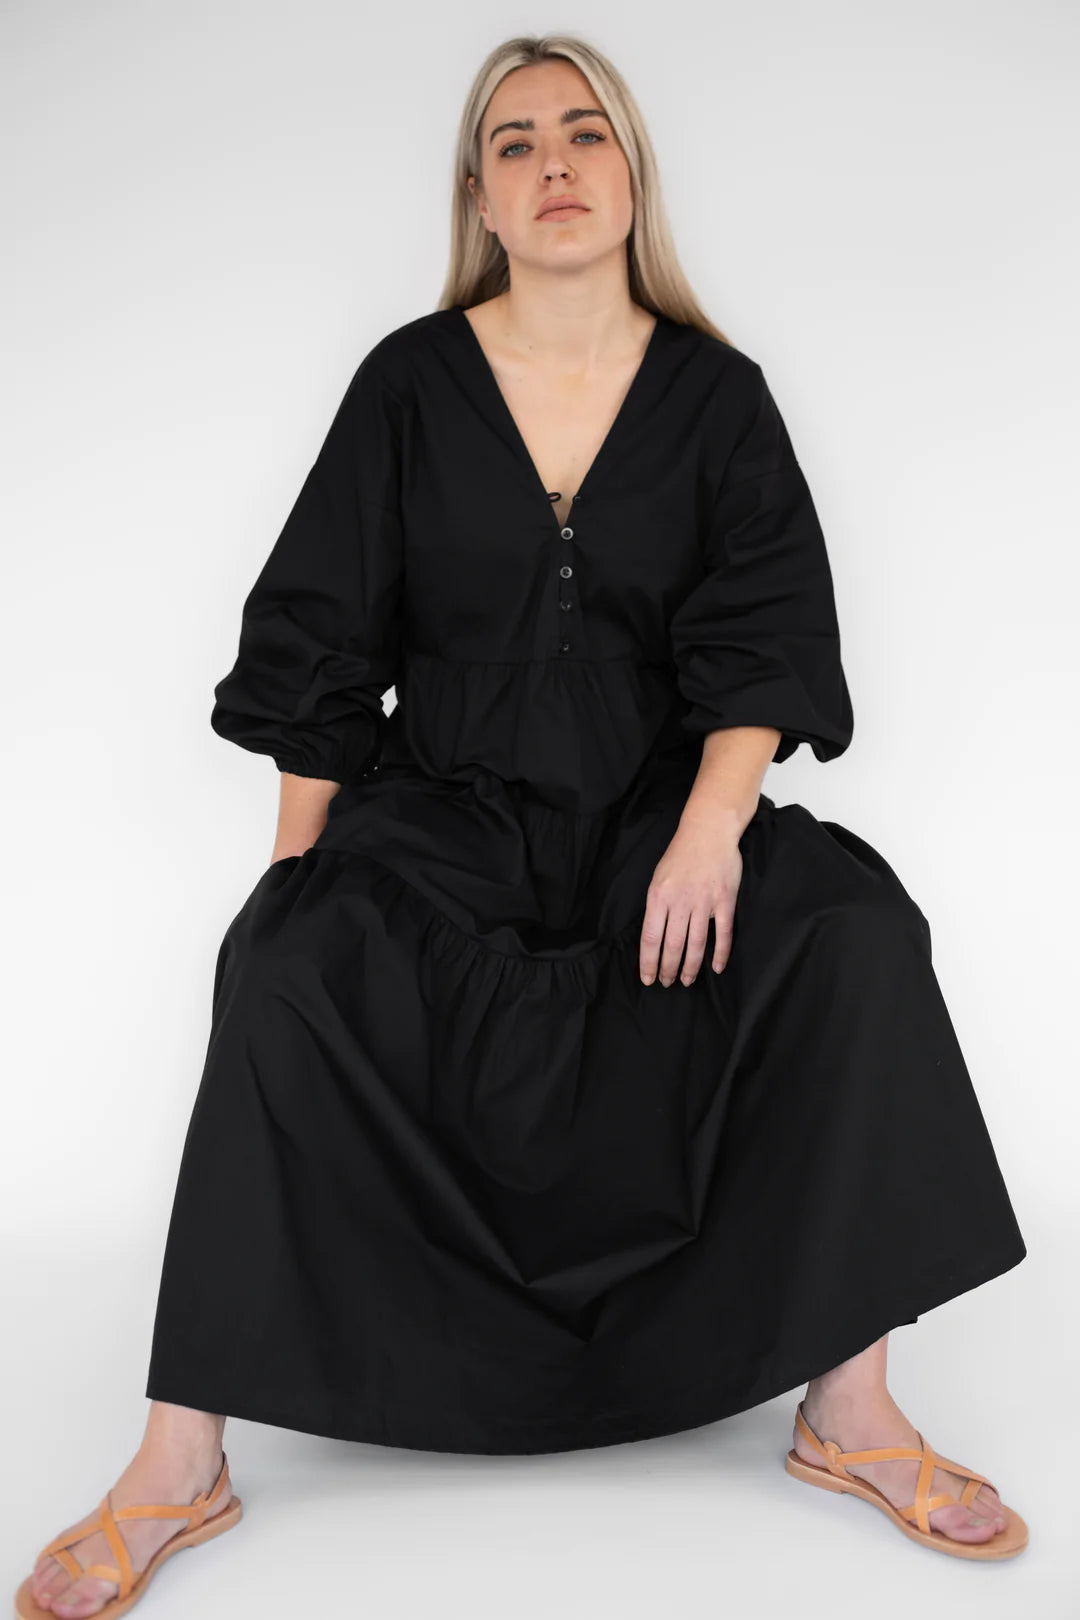 BEIGED // Penelope Dress BLACK